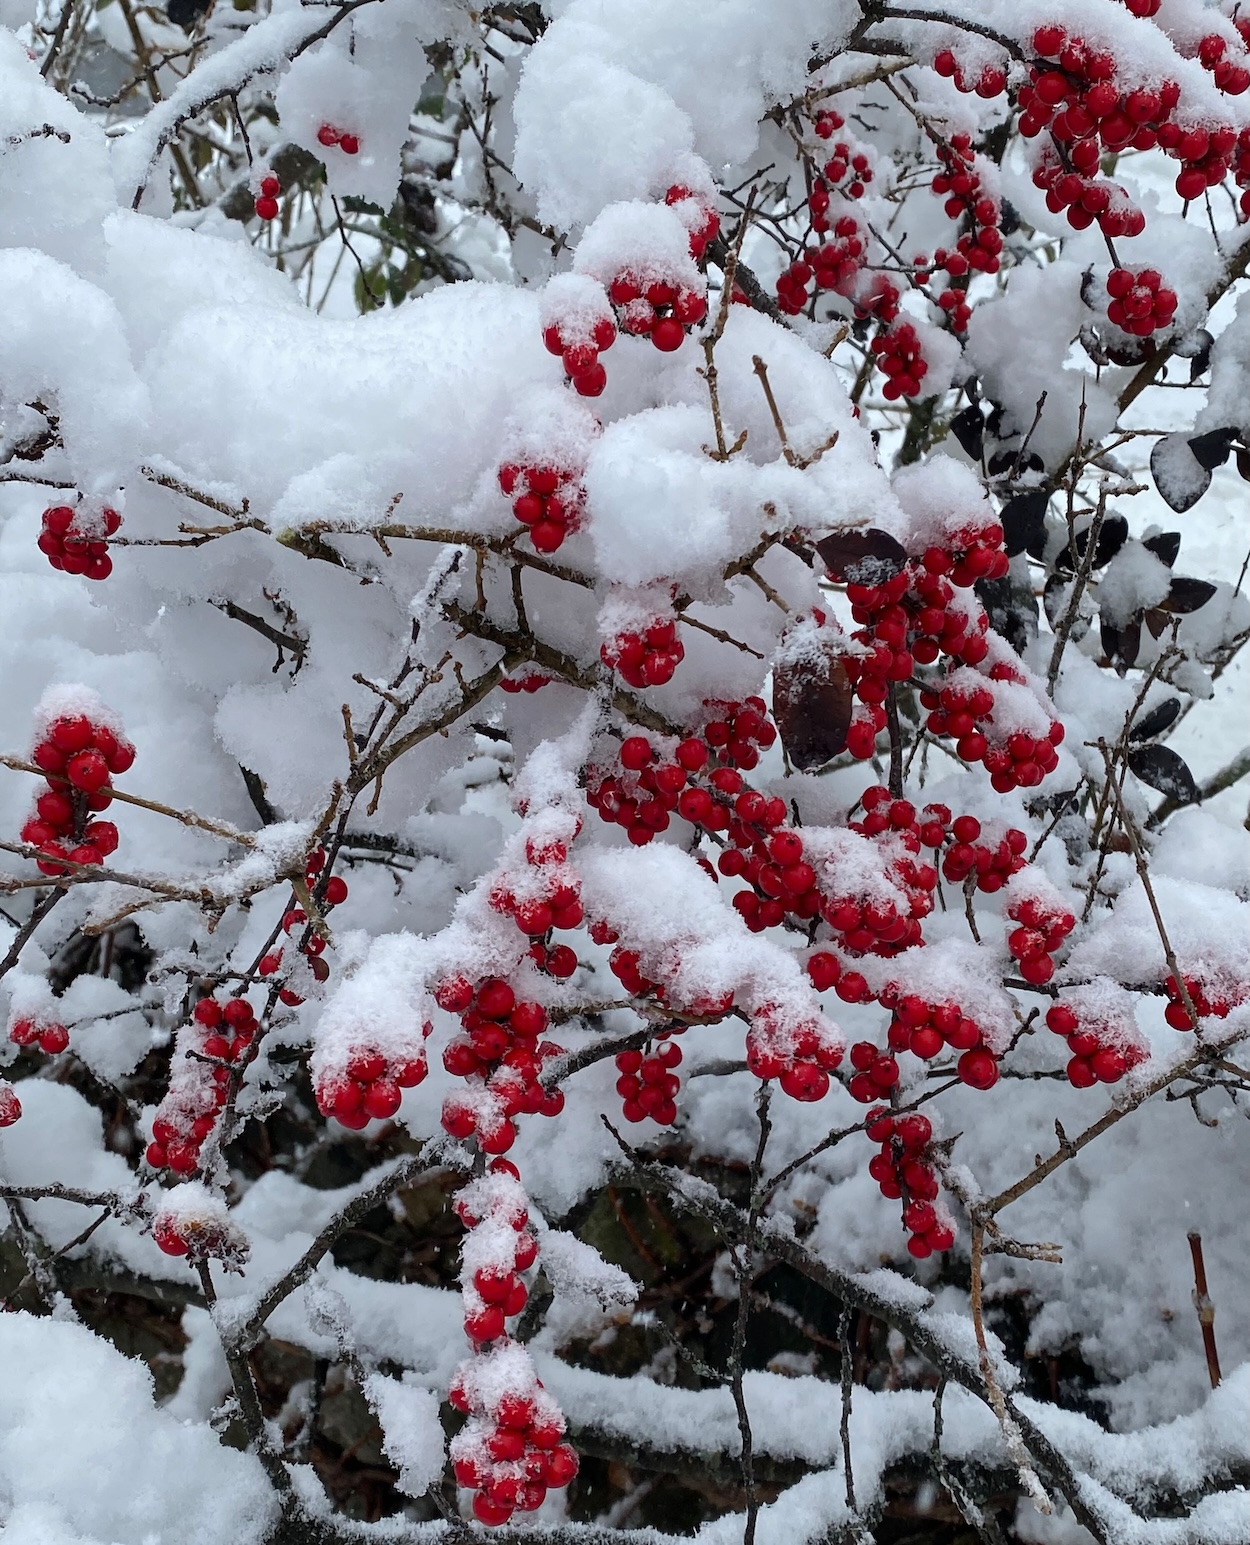 Red Winterberries in Snow